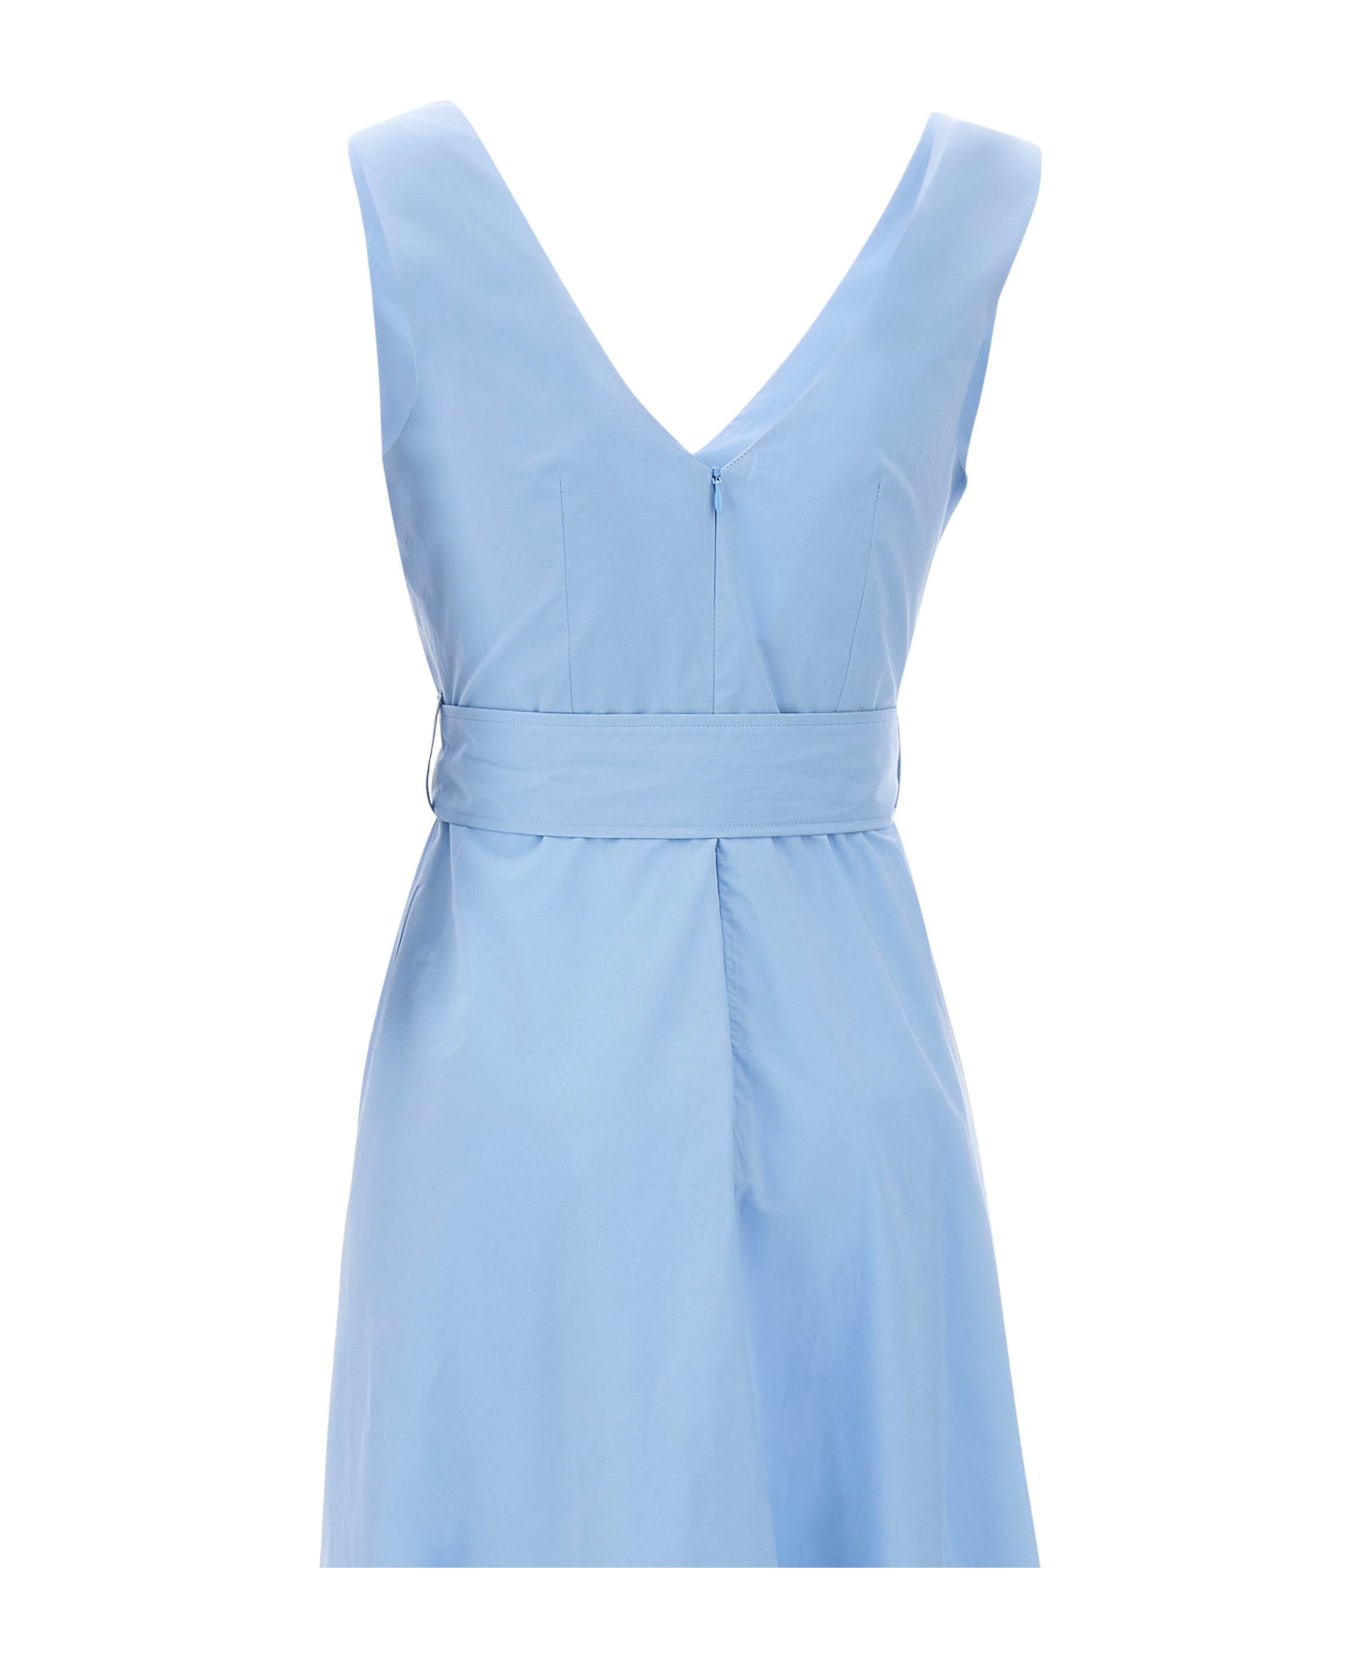 Parosh "canyox24" Cotton Dress - LIGHT BLUE